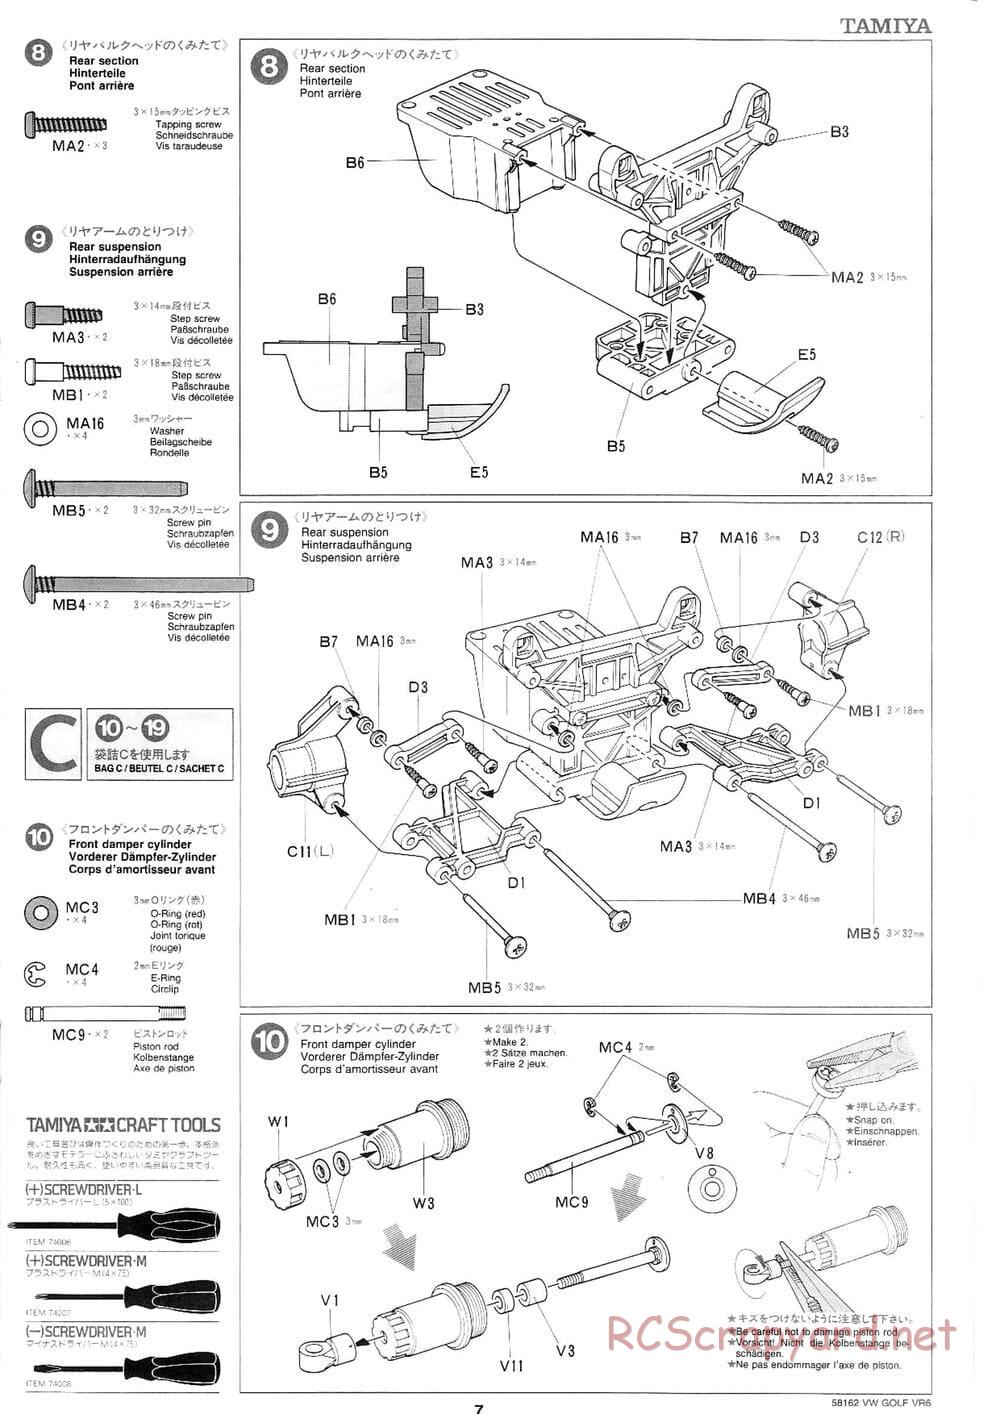 Tamiya - Volkswagen Golf VR6 - FF-01 Chassis - Manual - Page 7